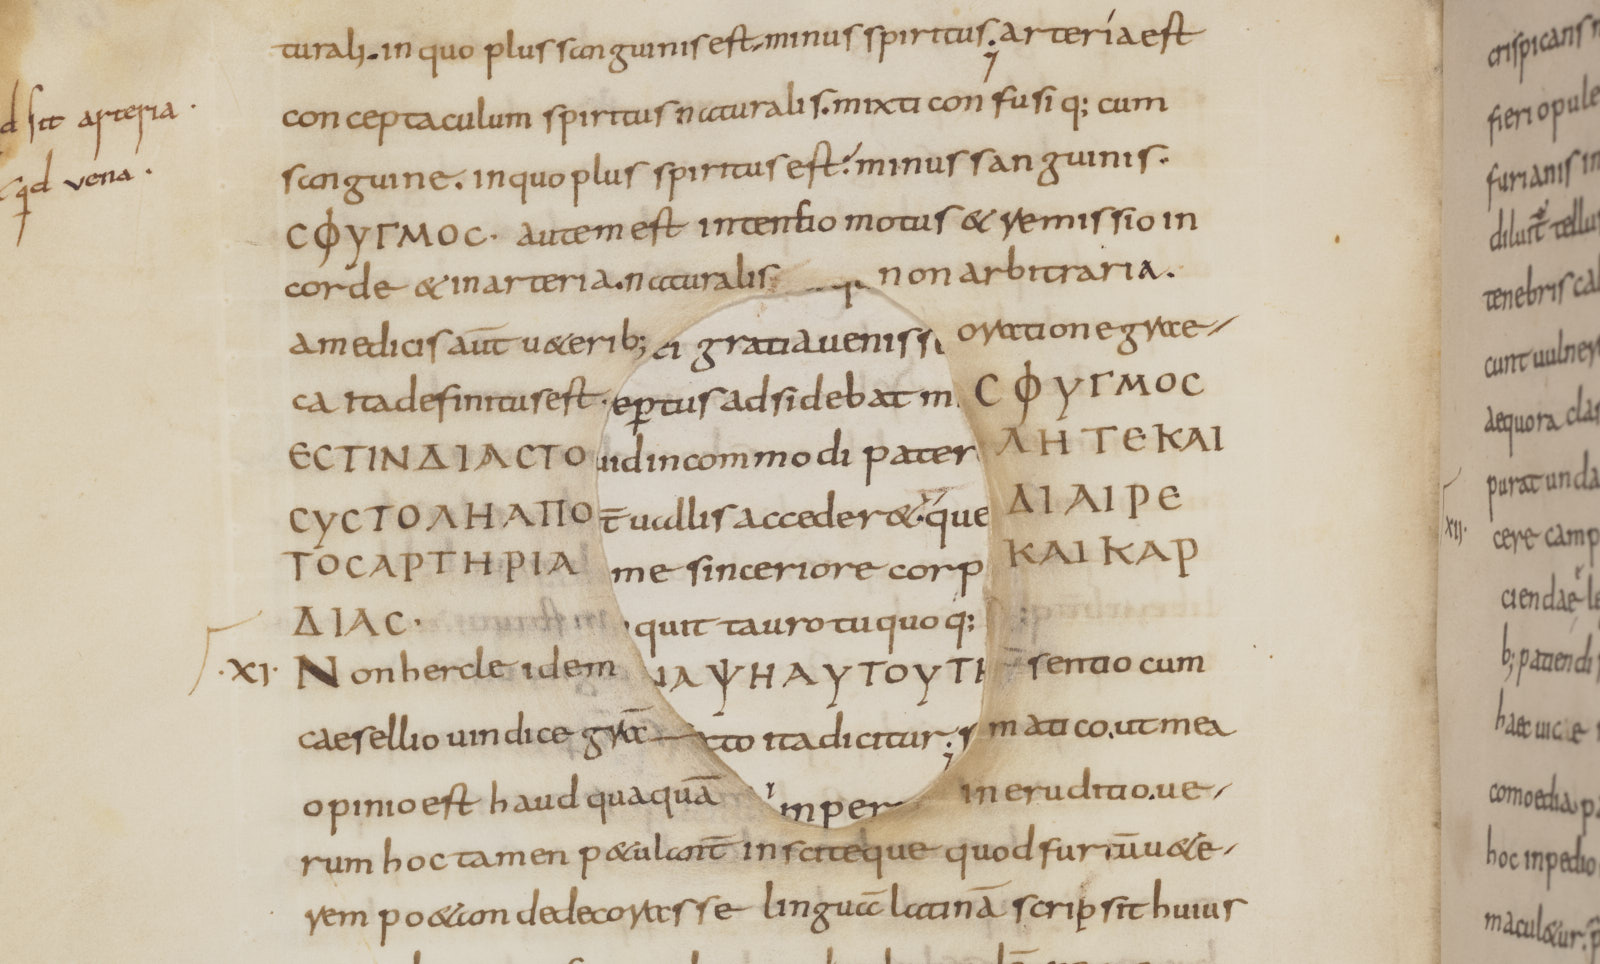 The oldest manuscript in Tresoar